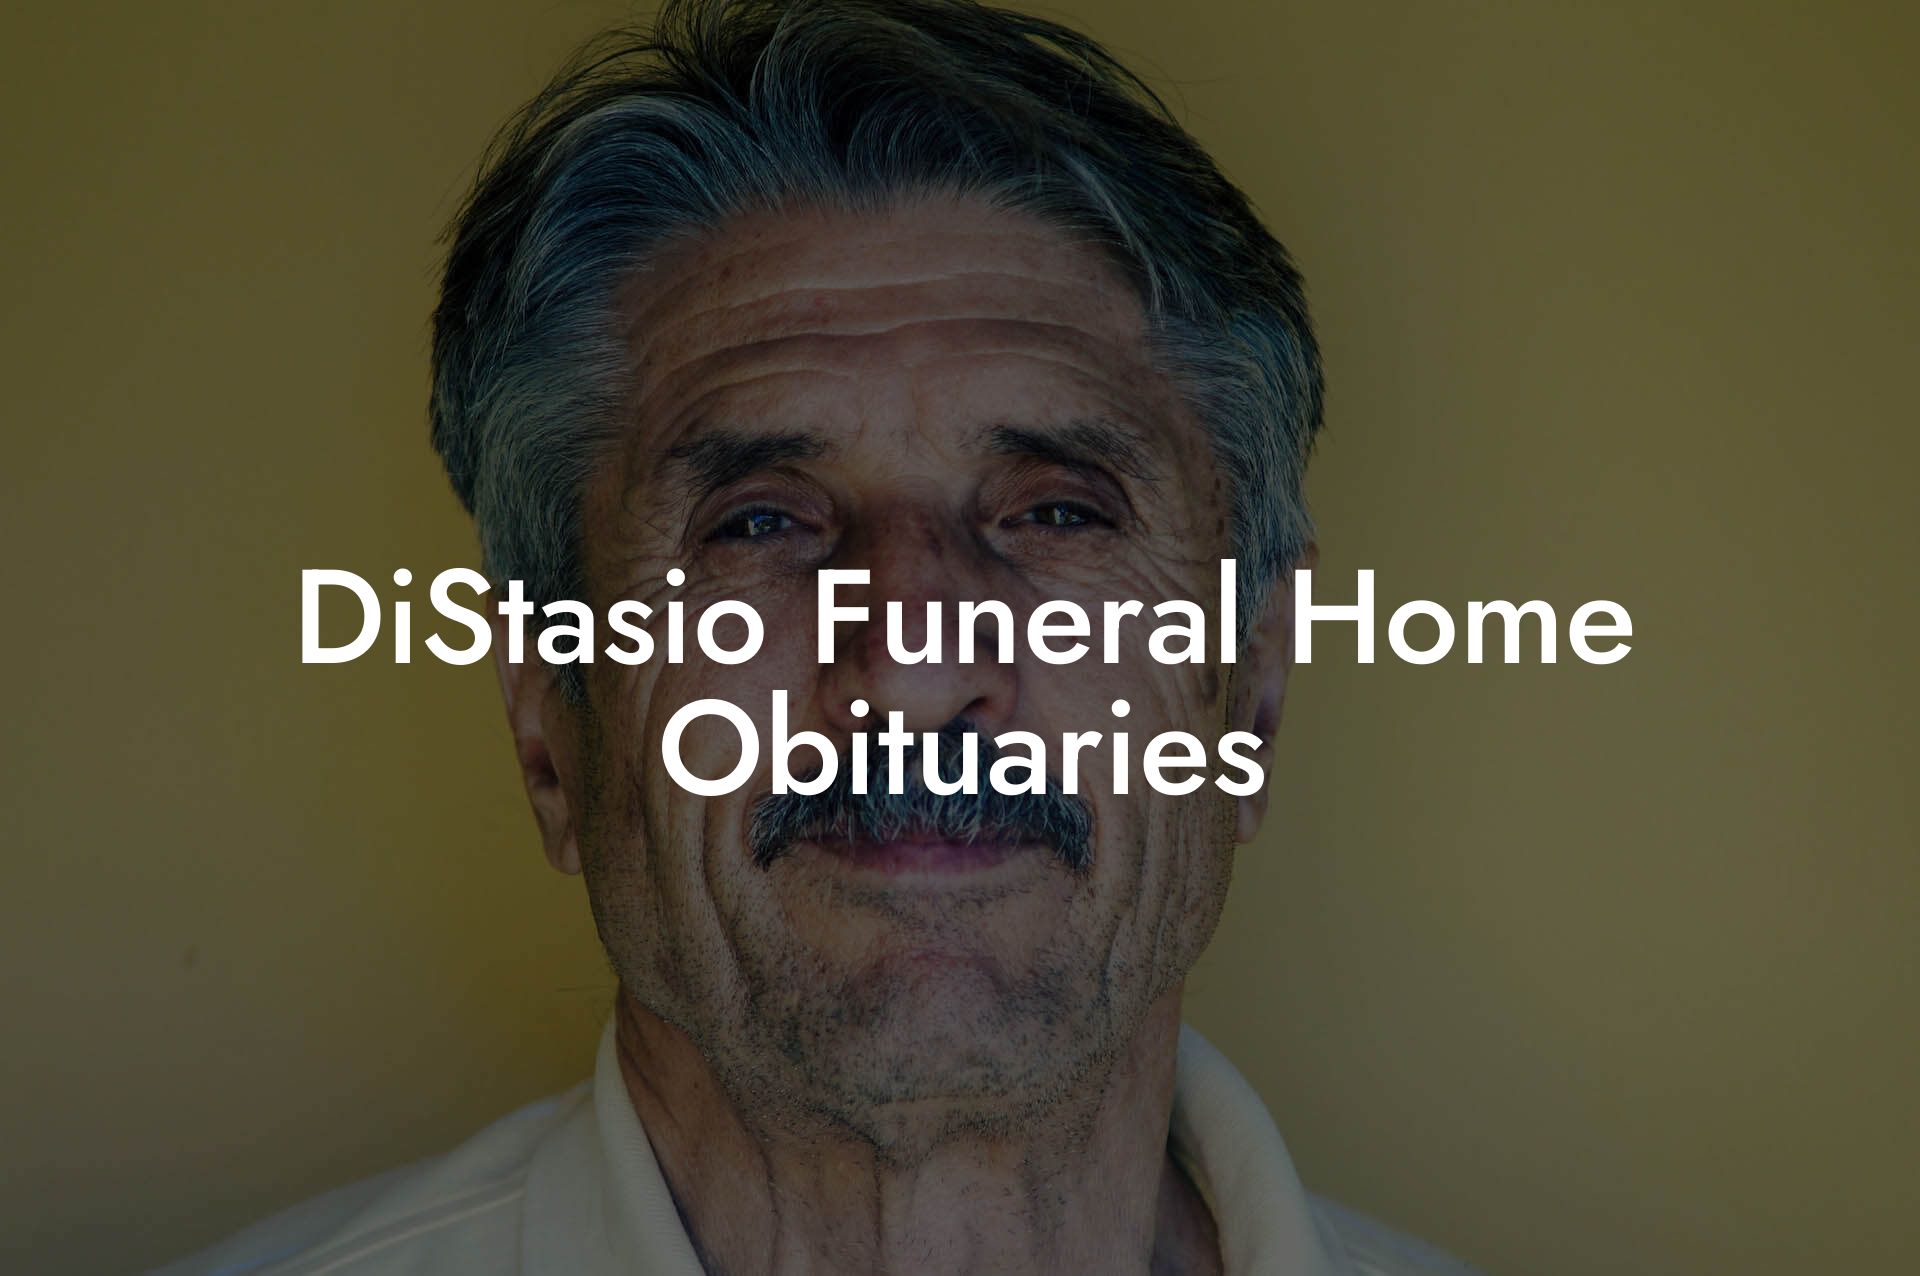 DiStasio Funeral Home Obituaries